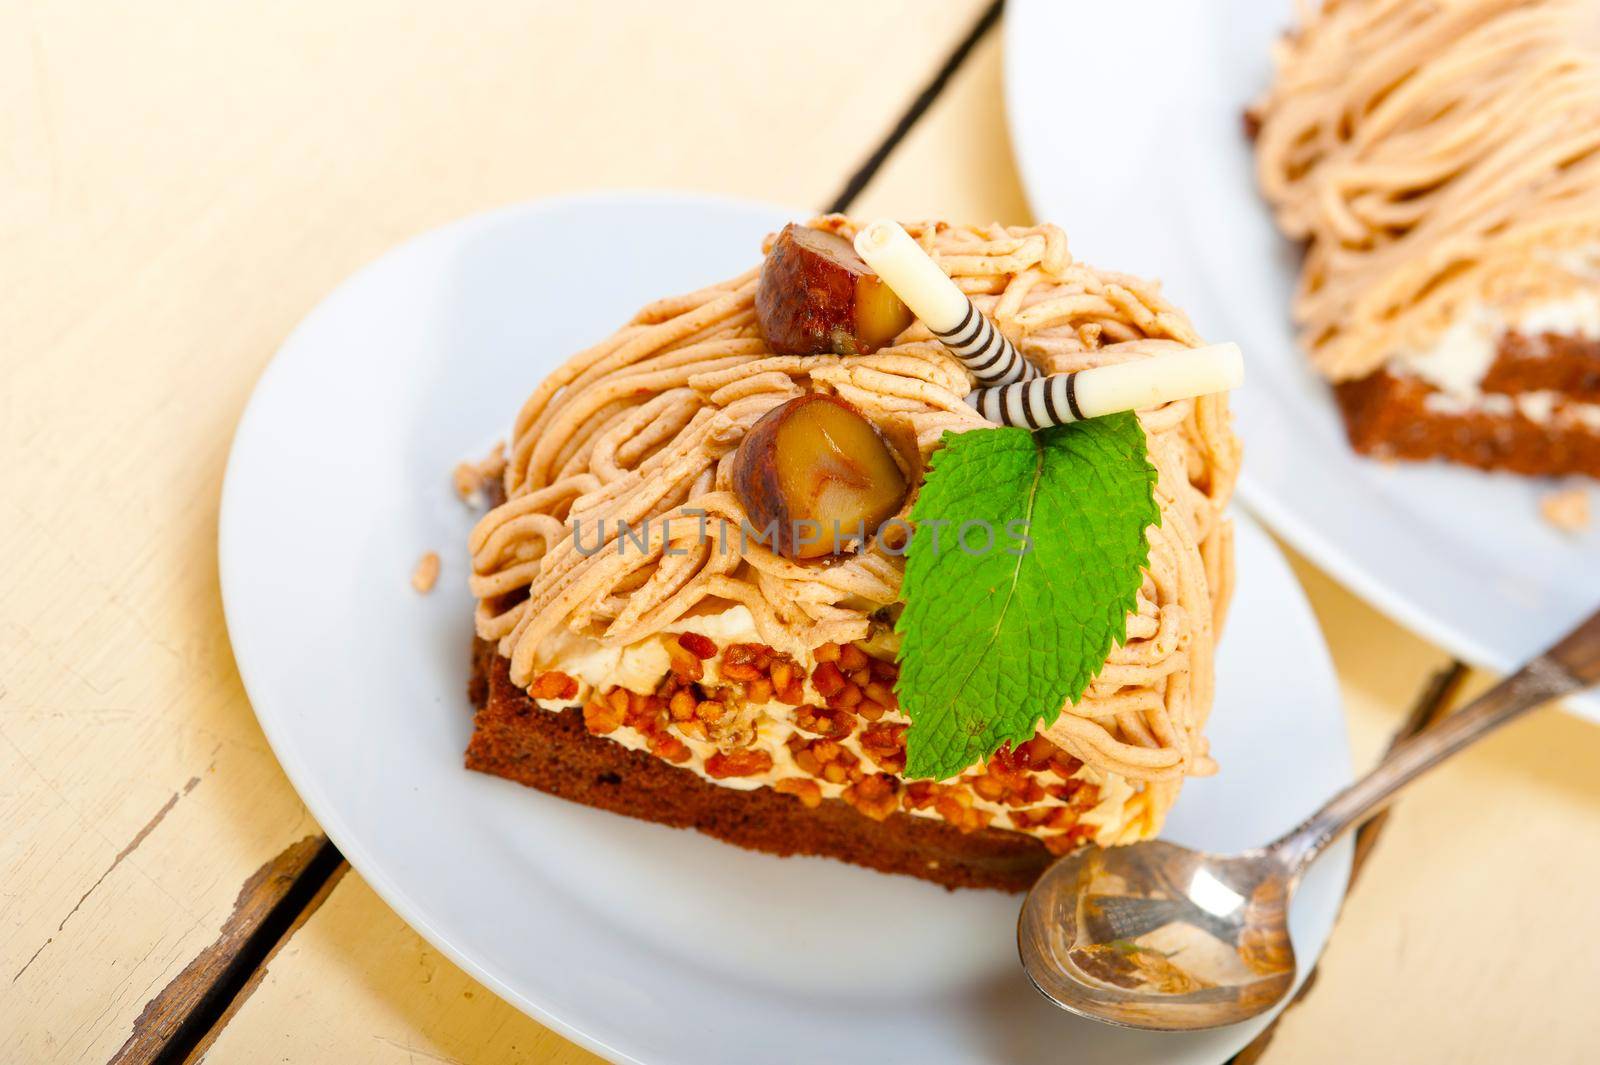 chestnut cream cake dessert by keko64